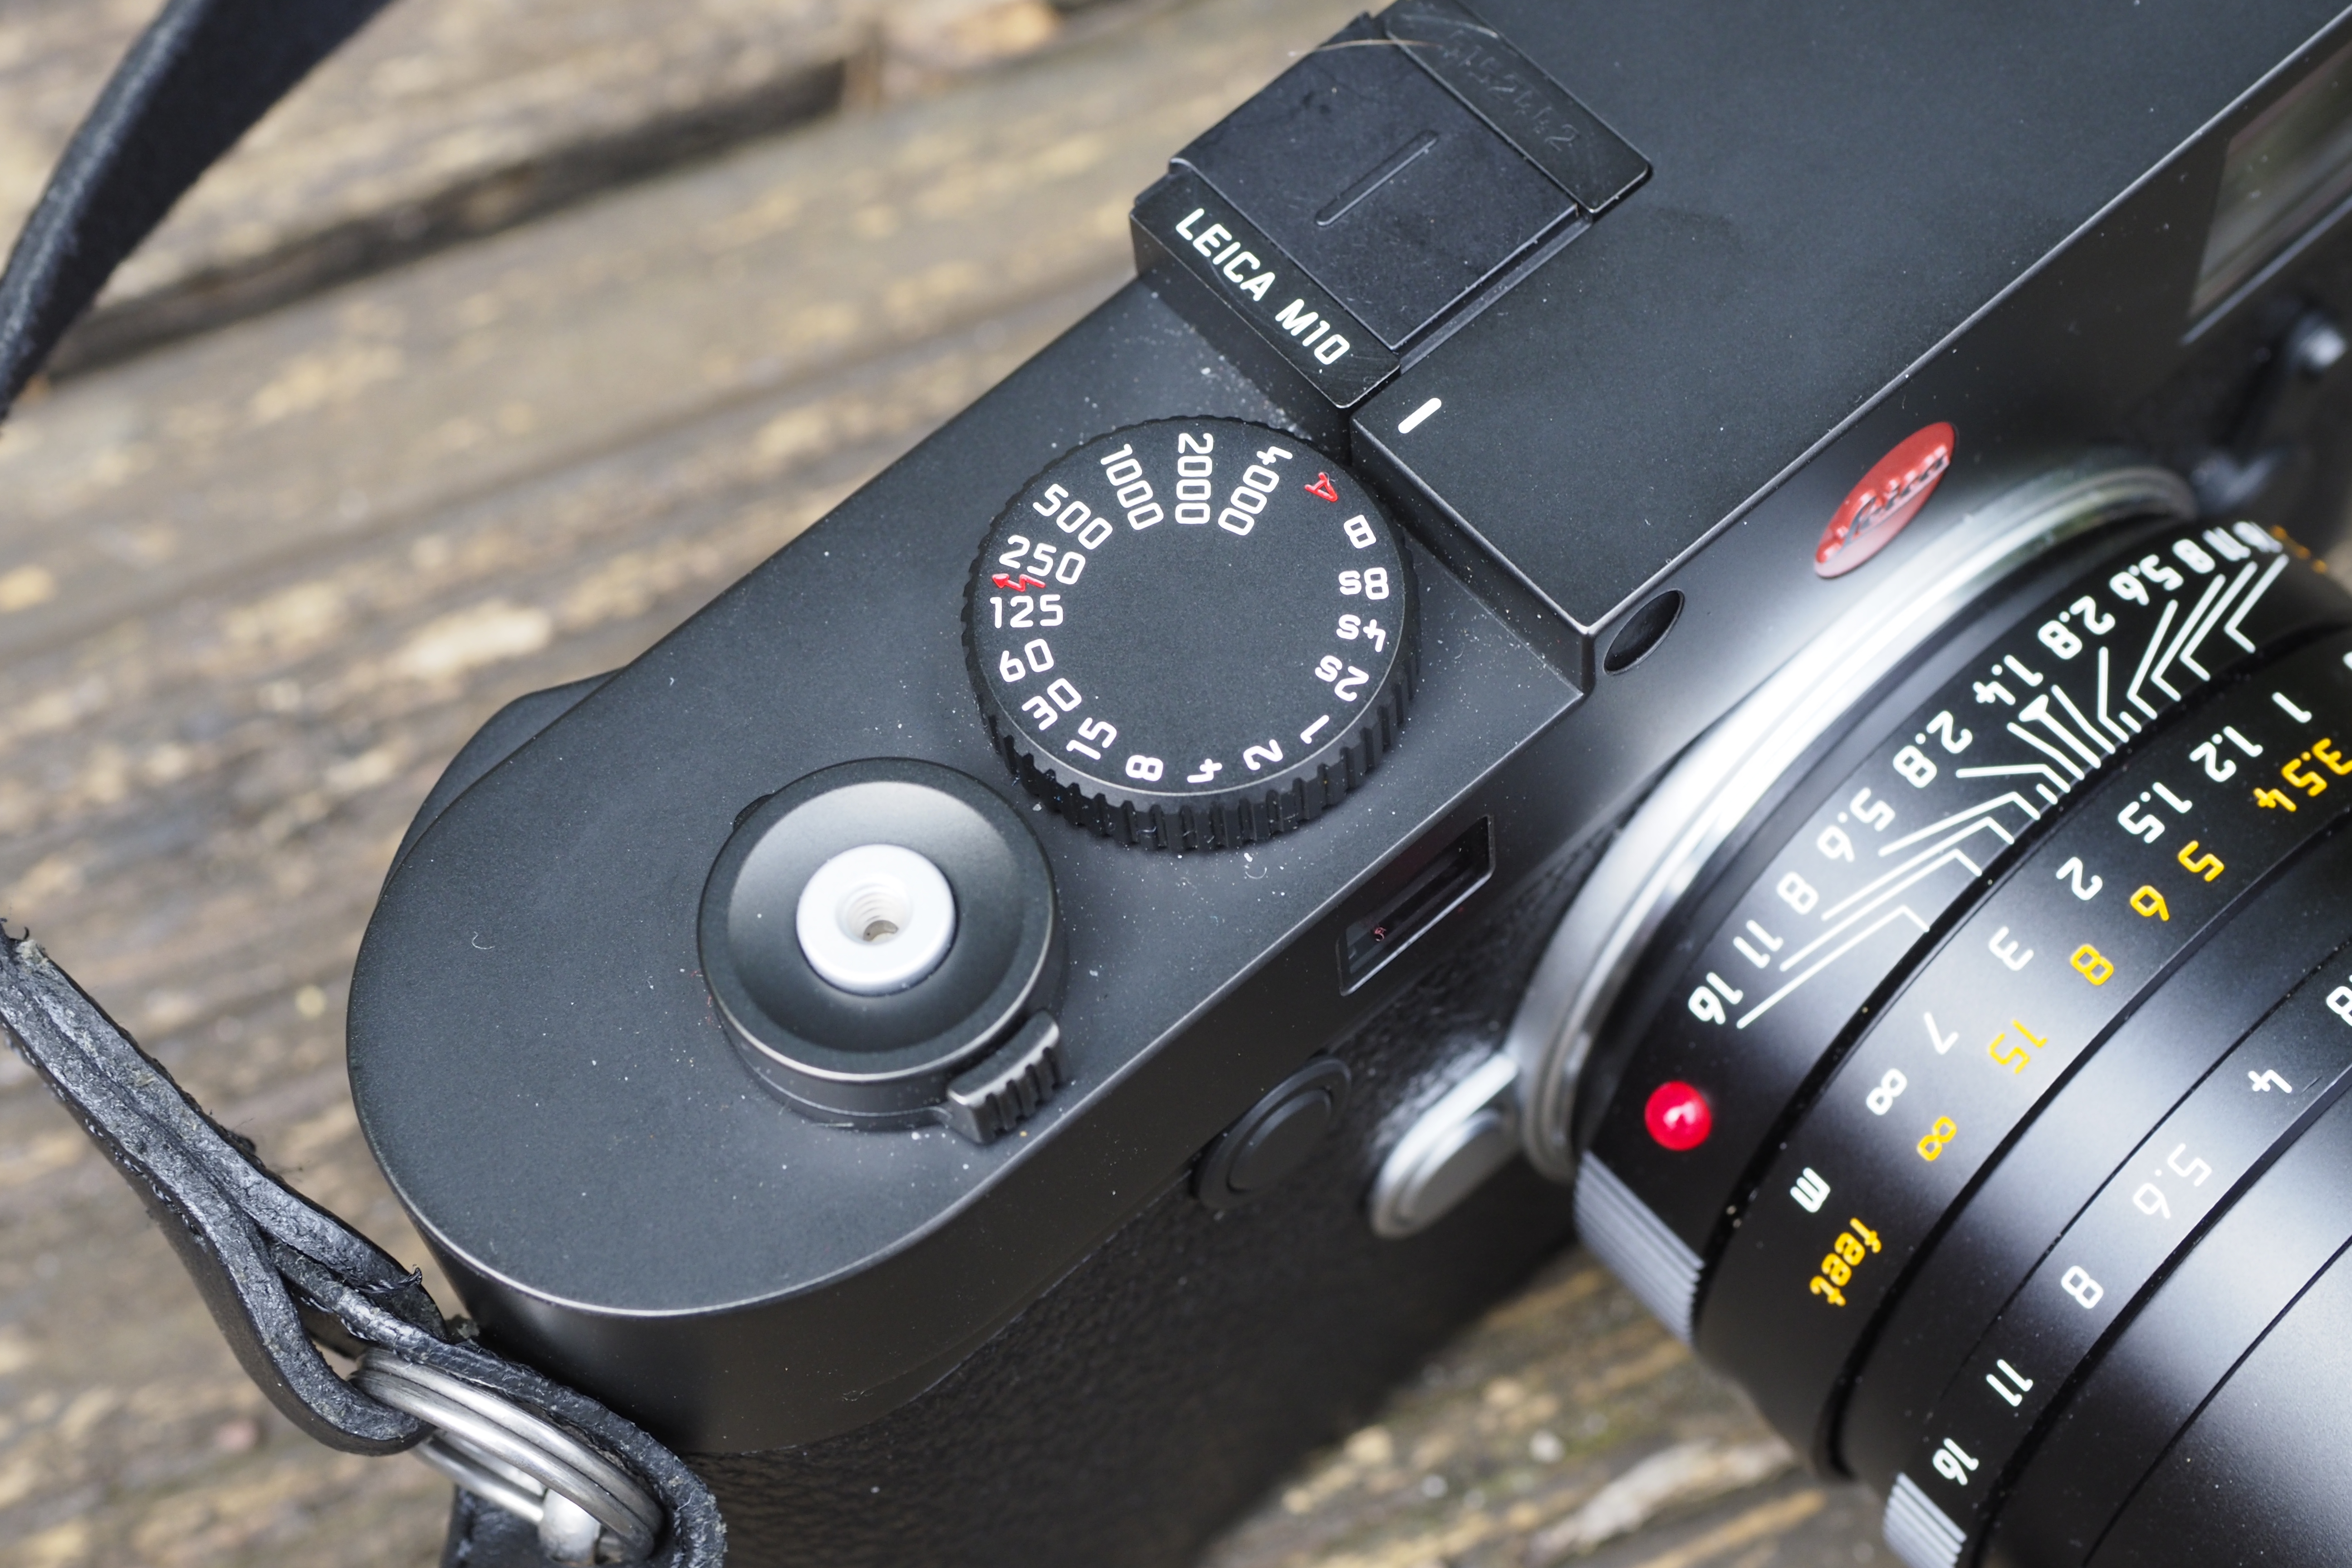 Leica M10 controls: simpler times